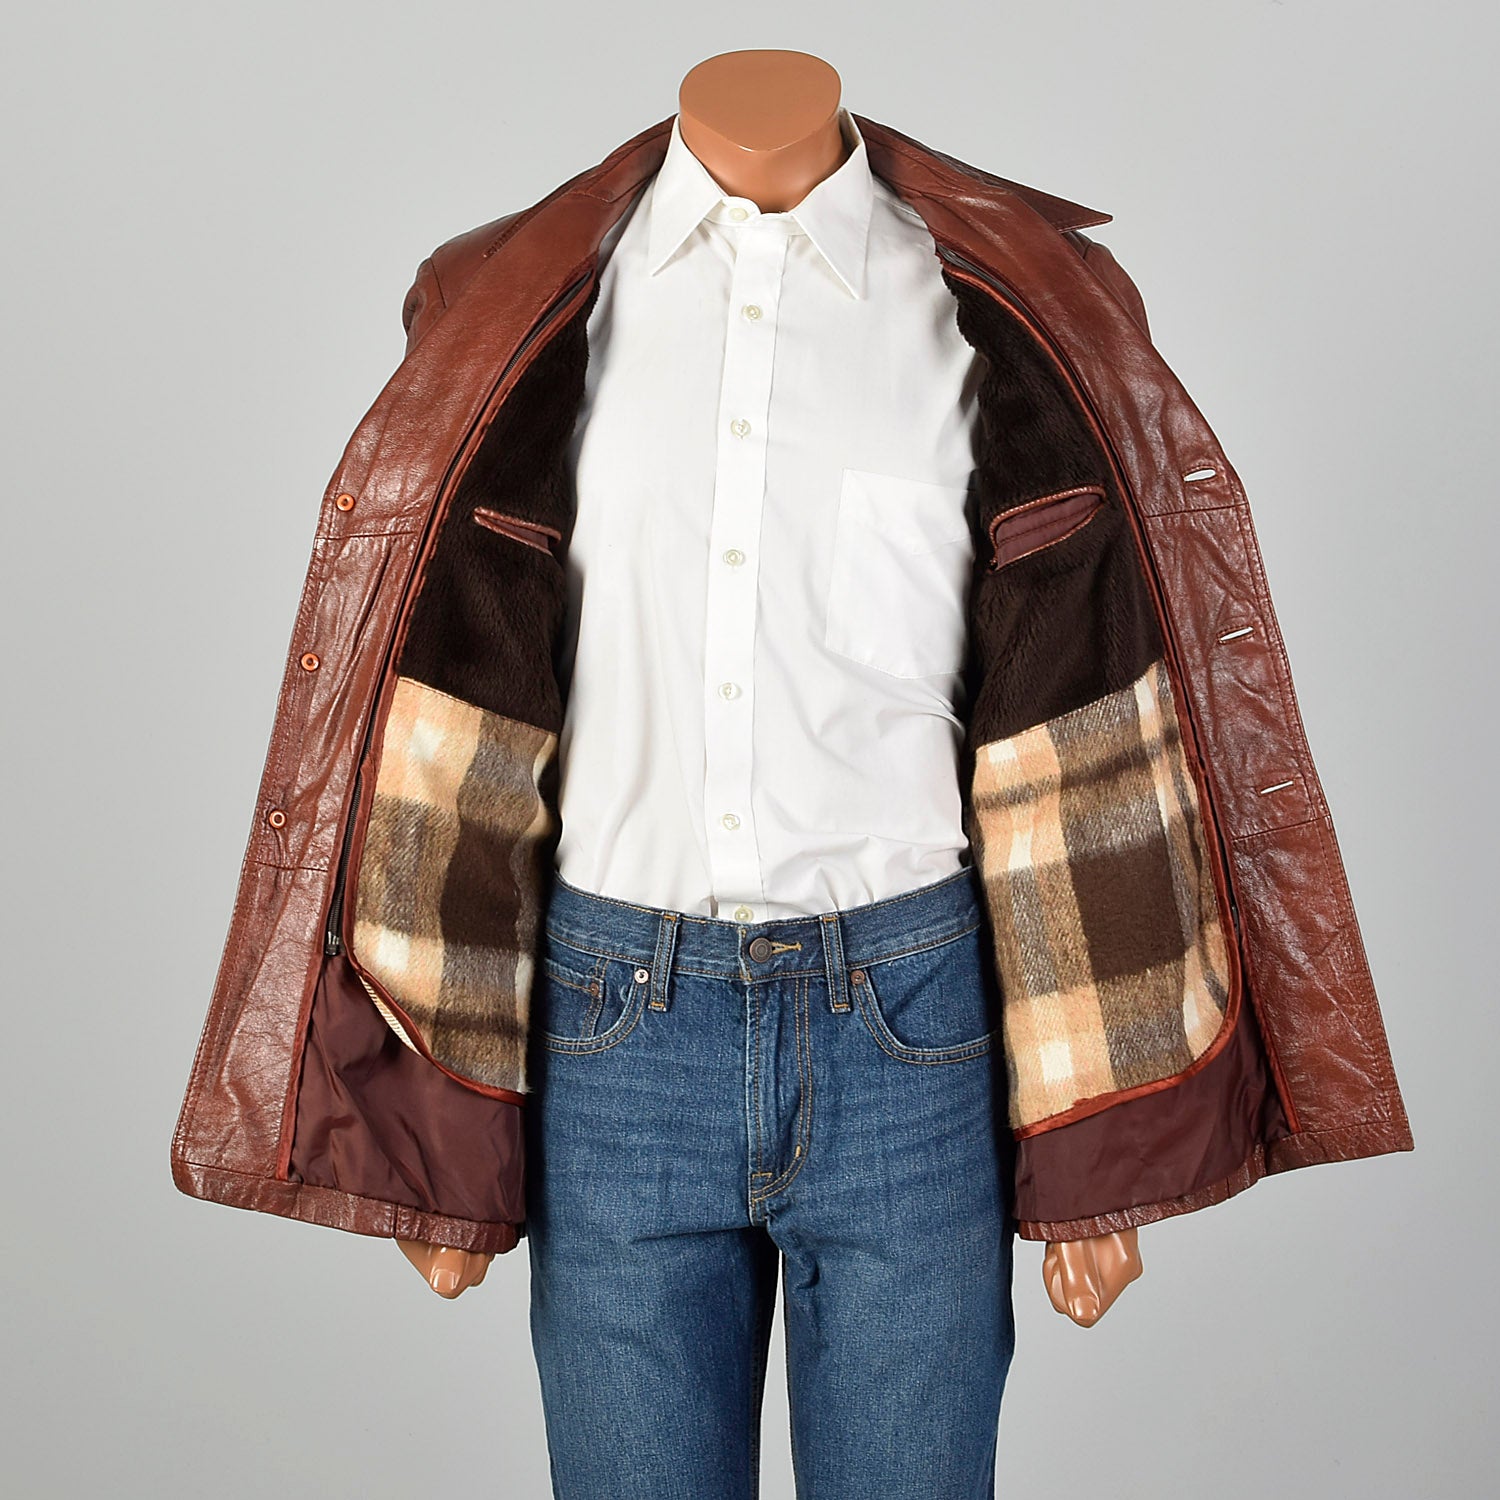 Medium 1970s Men's Burgundy Leather Jacket